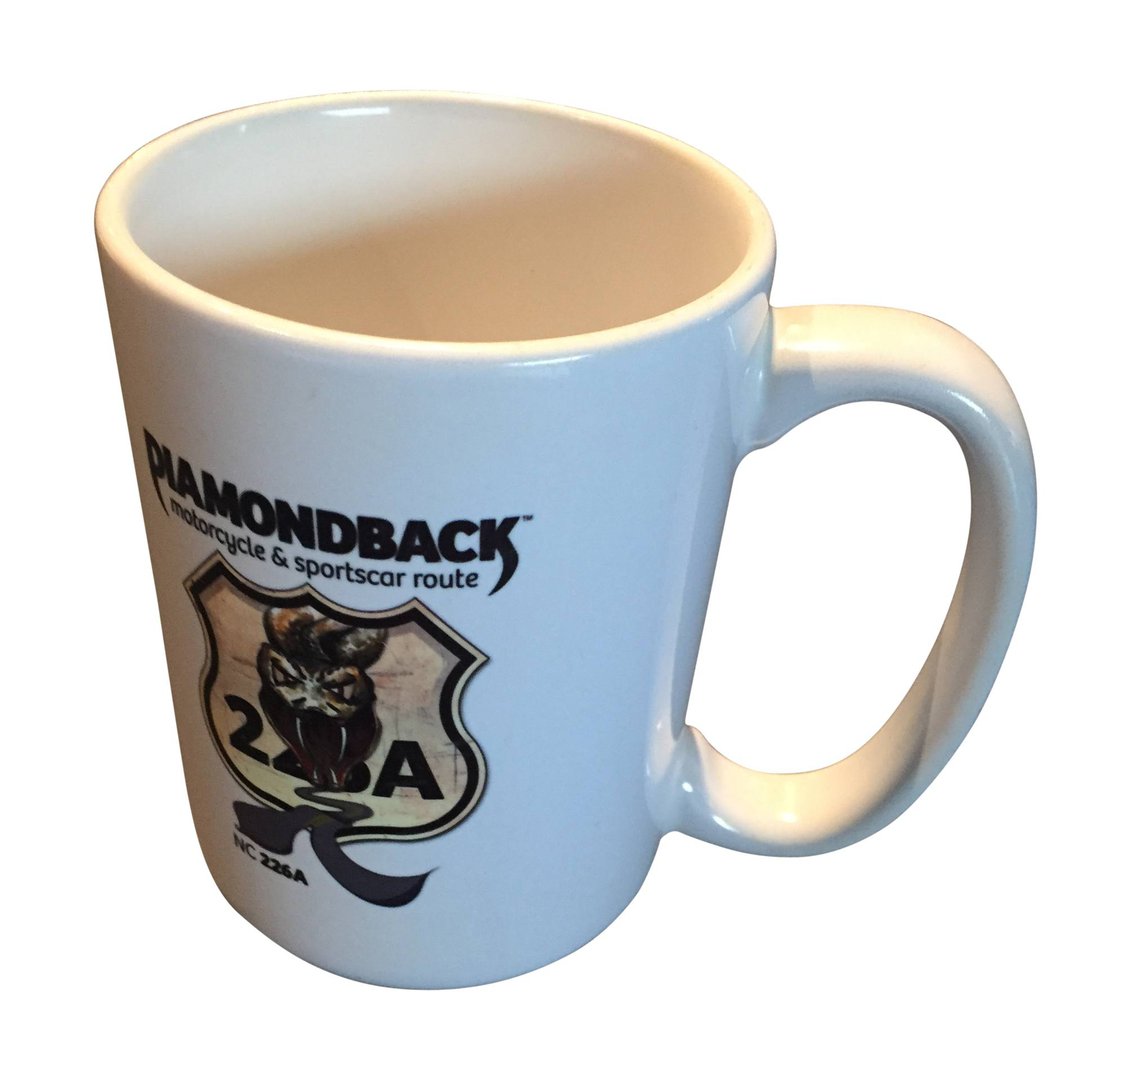 Diamondback mug